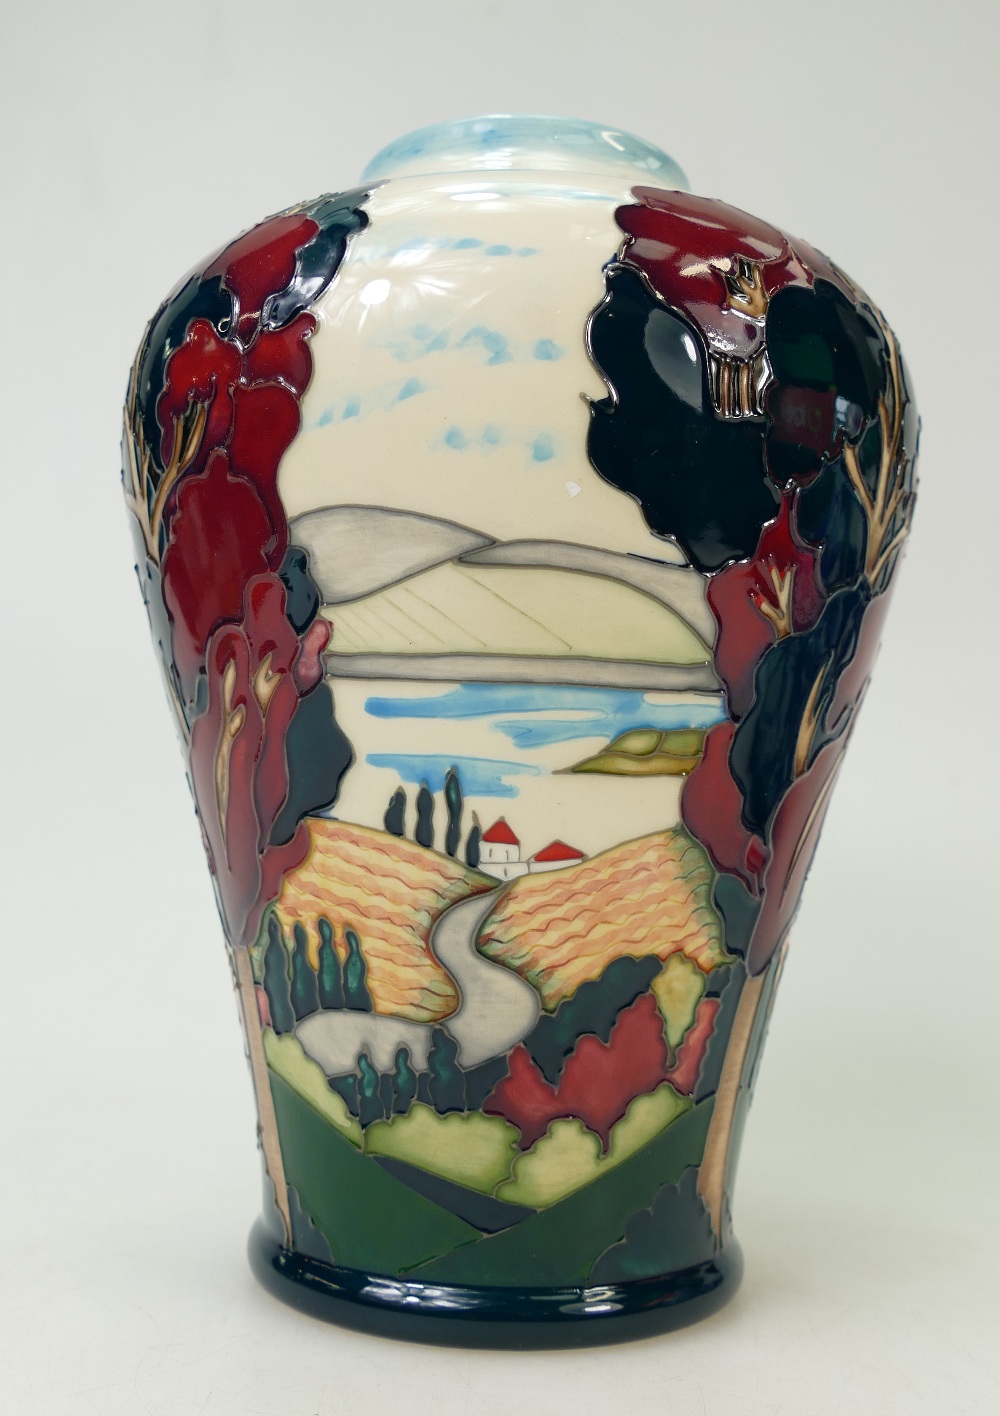 Moorcroft Italian Lakes Vase: A trial Italian Lakes vase - 24.11.15. 22cm high. - Image 4 of 4